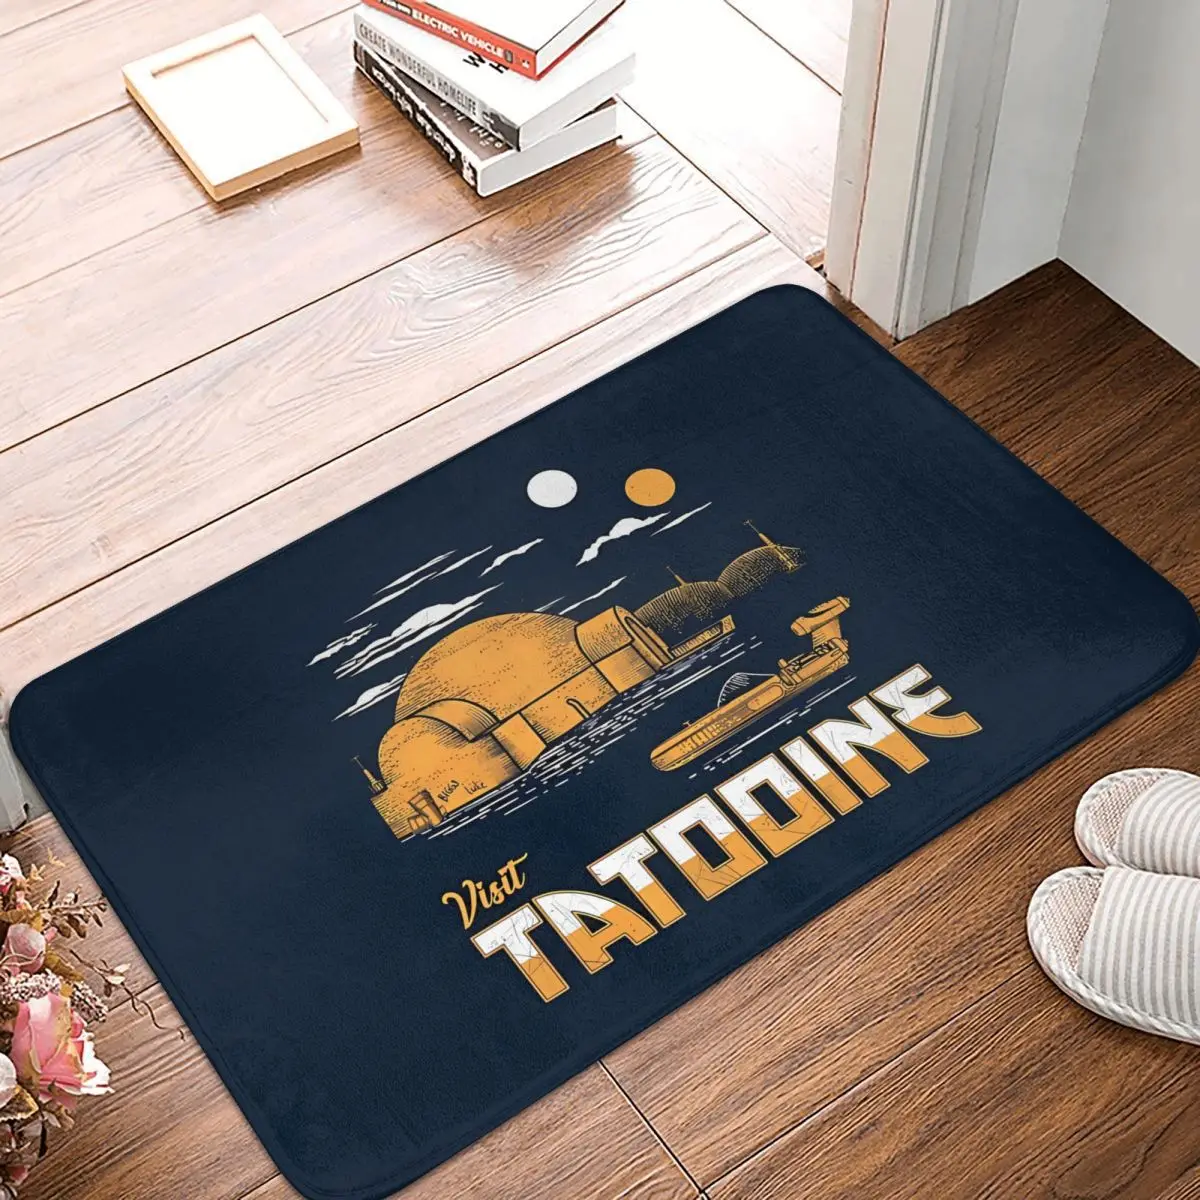 

Visit Tatooine Bath Non-Slip Carpet Navy Blue Living Room Mat Welcome Doormat Floor Decoration Rug